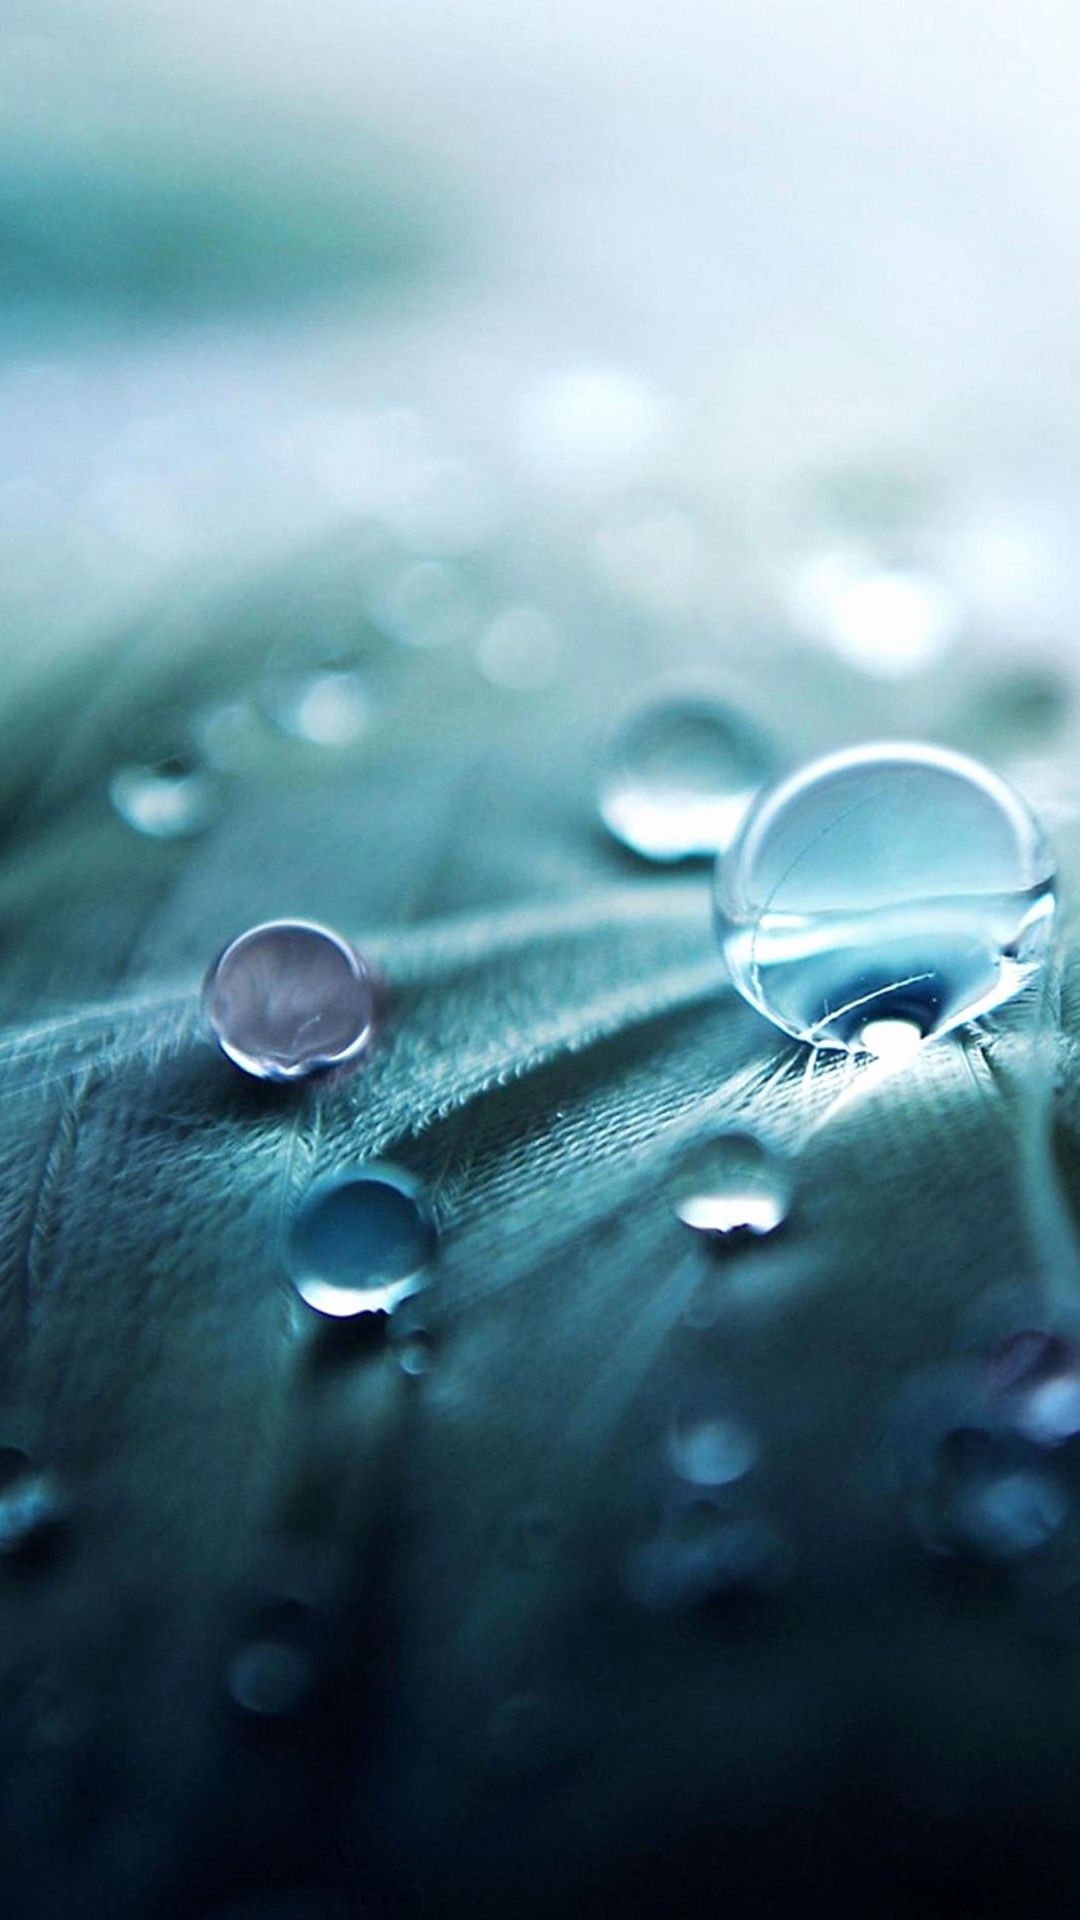 Water Drops Wallpaper Inspirational iPhone 6 Wallpaper